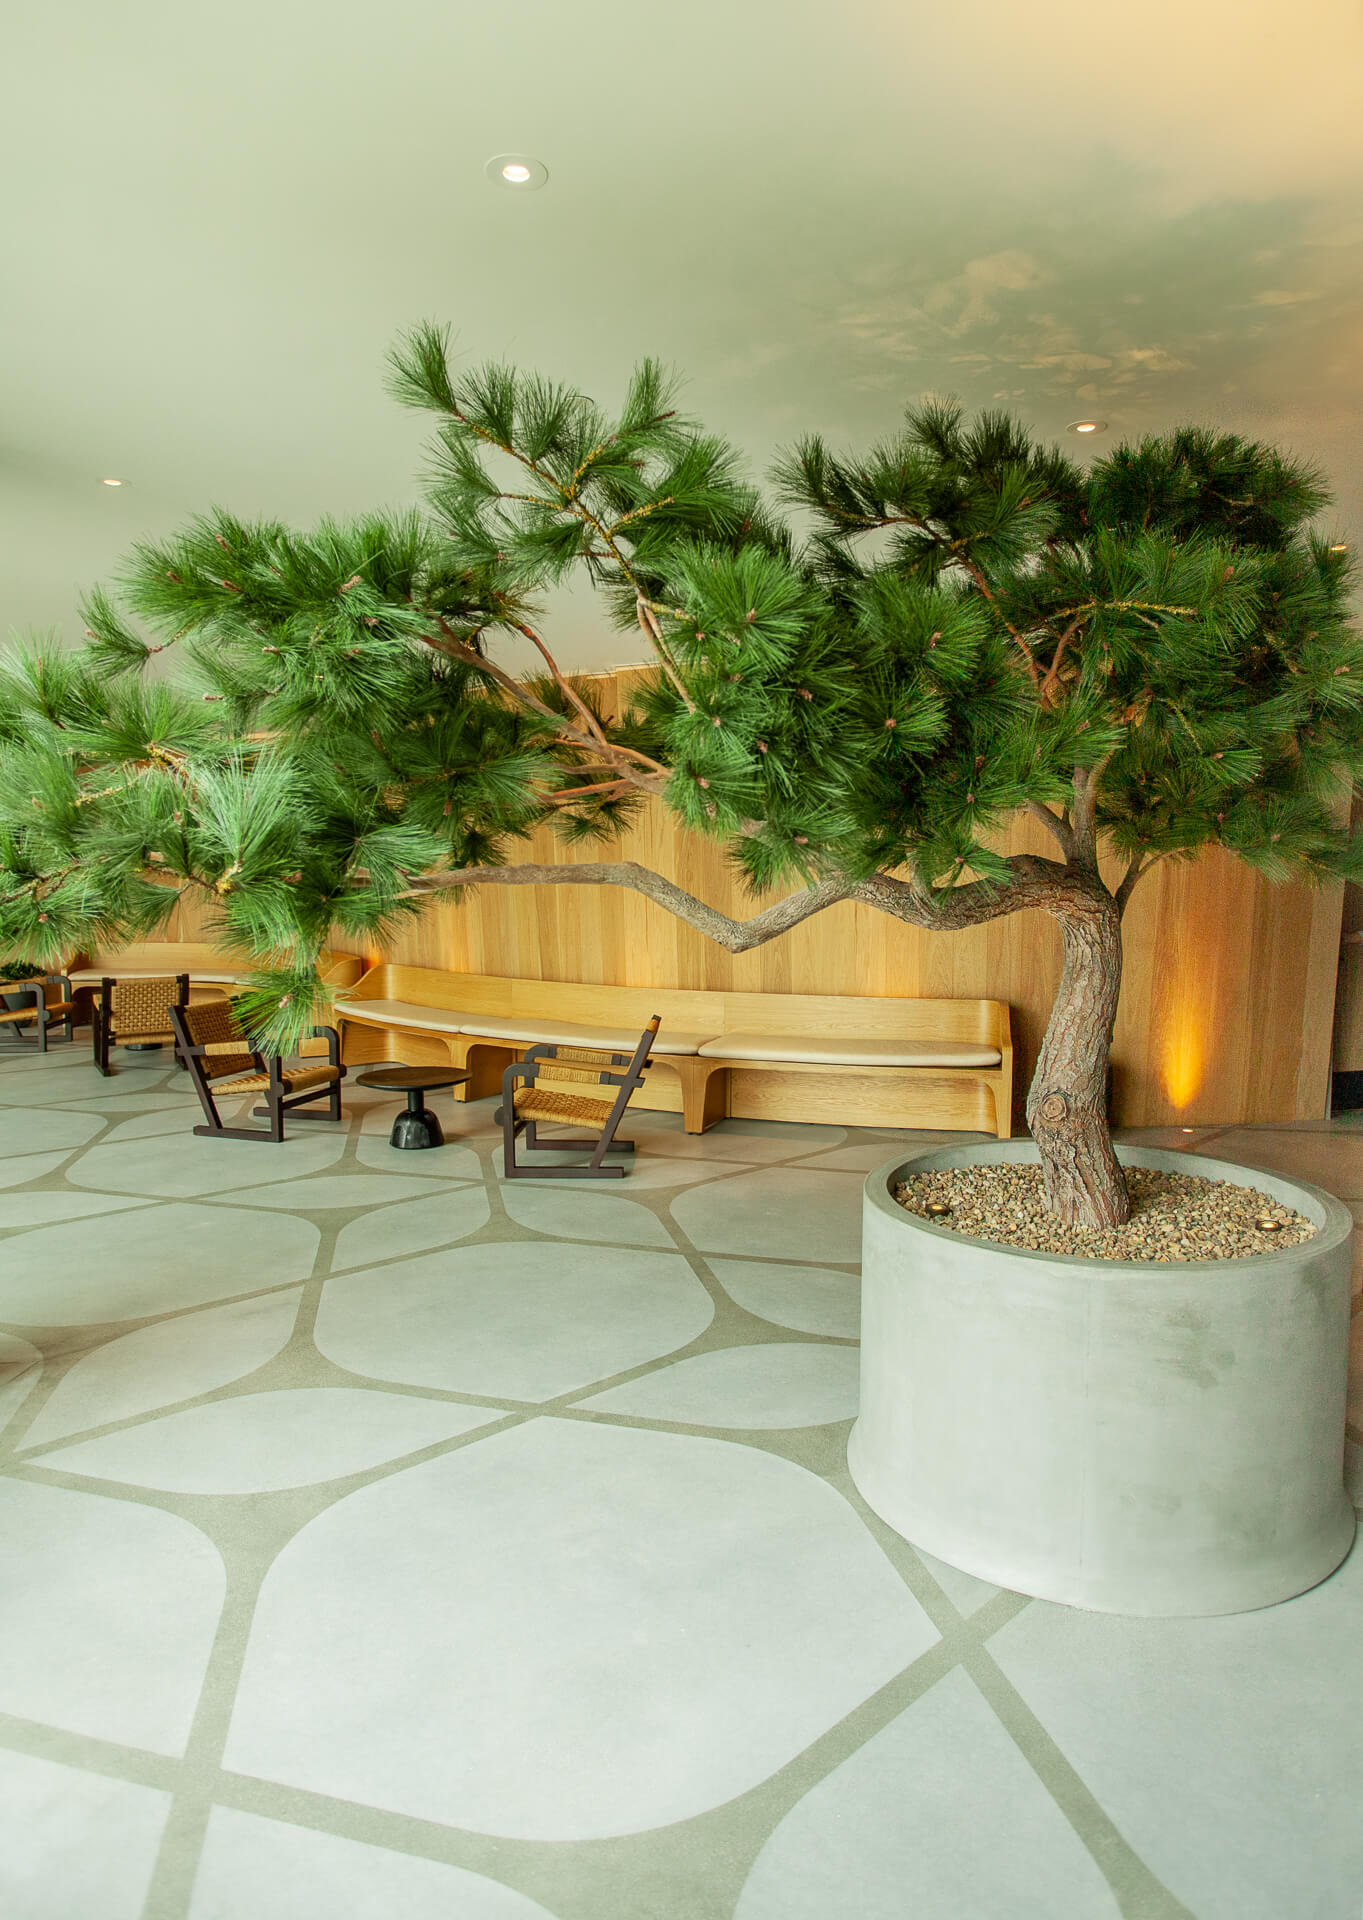 Alila Marea Resort Torrey Pine Tree near lobby seating area